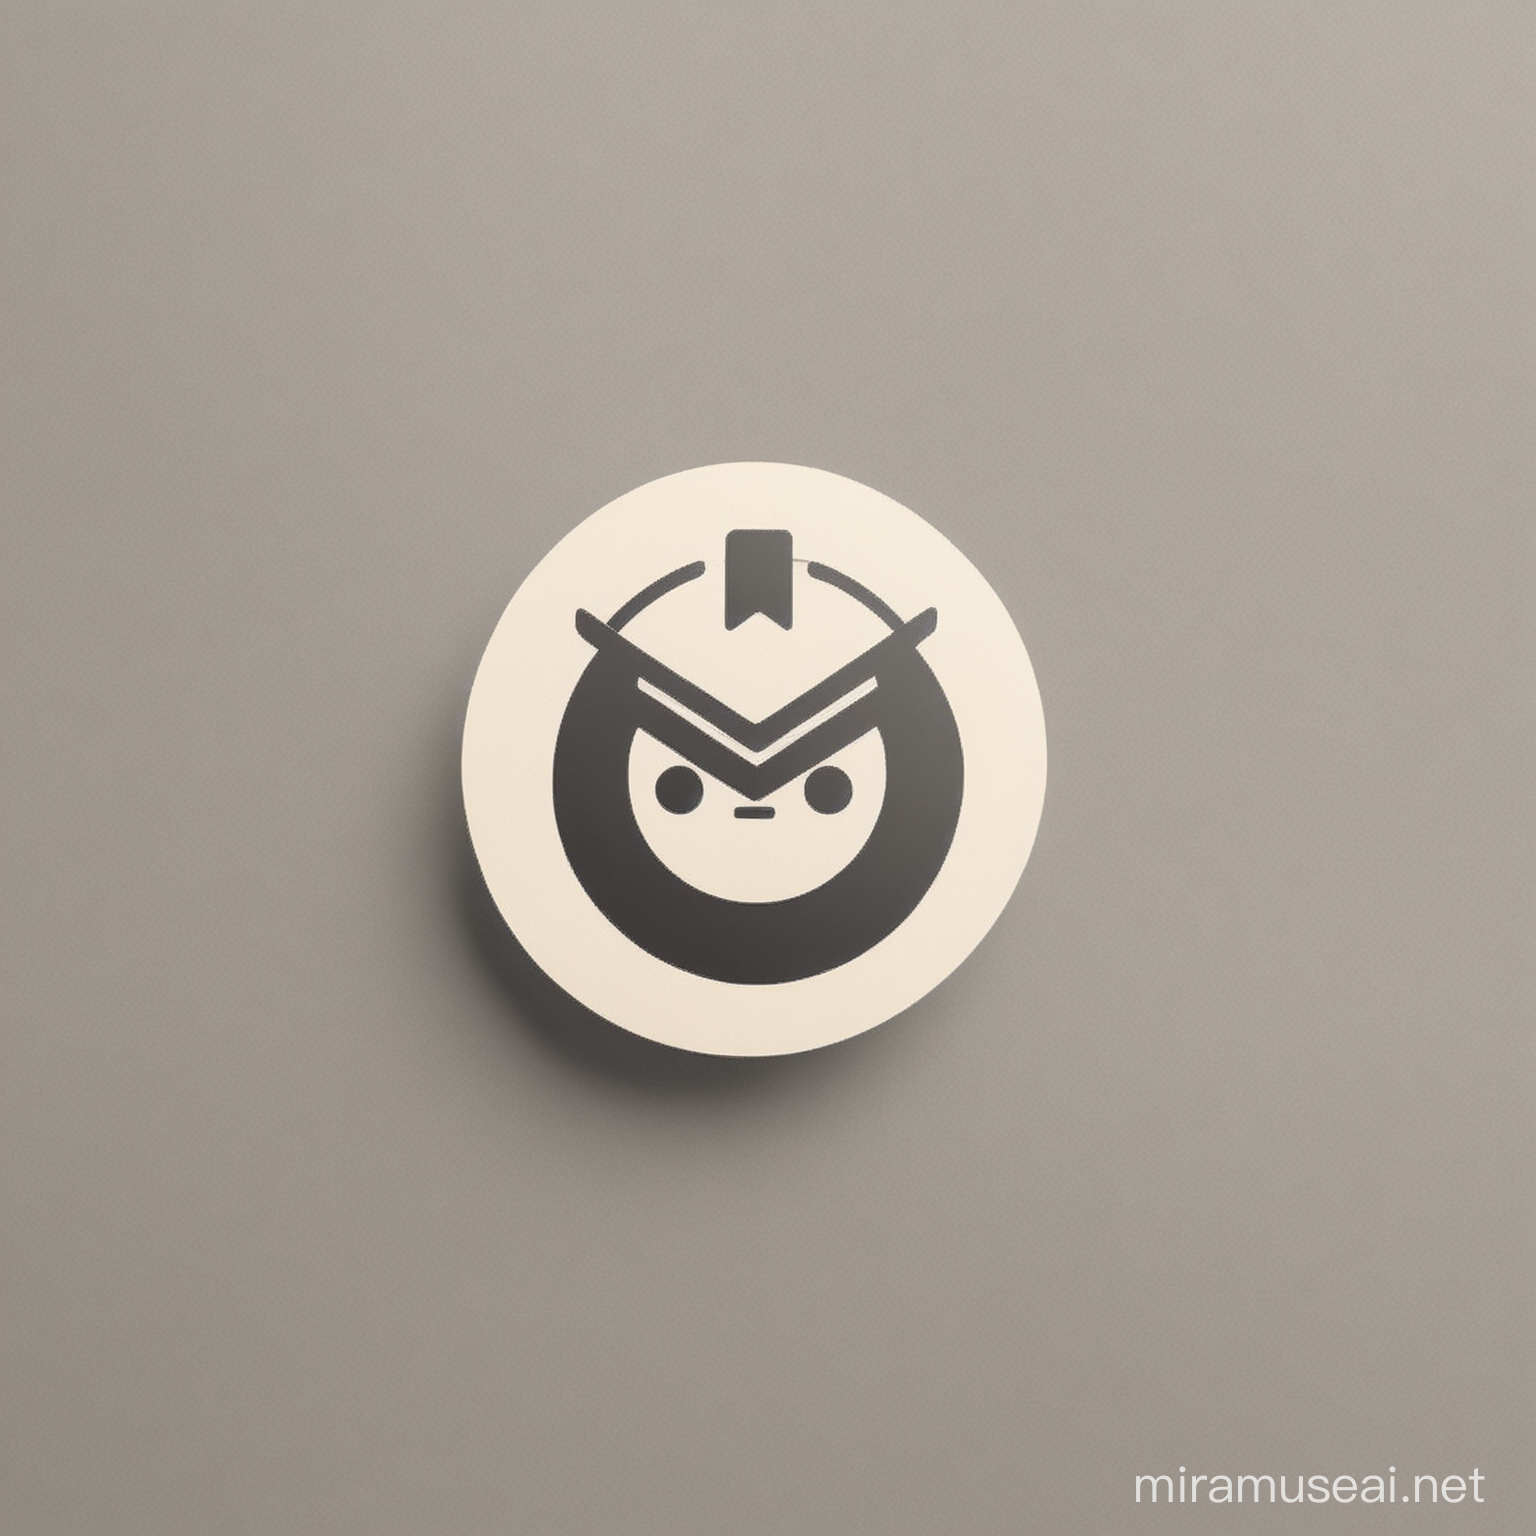 Minimalistic Kintaro Logo Design for Digital Company